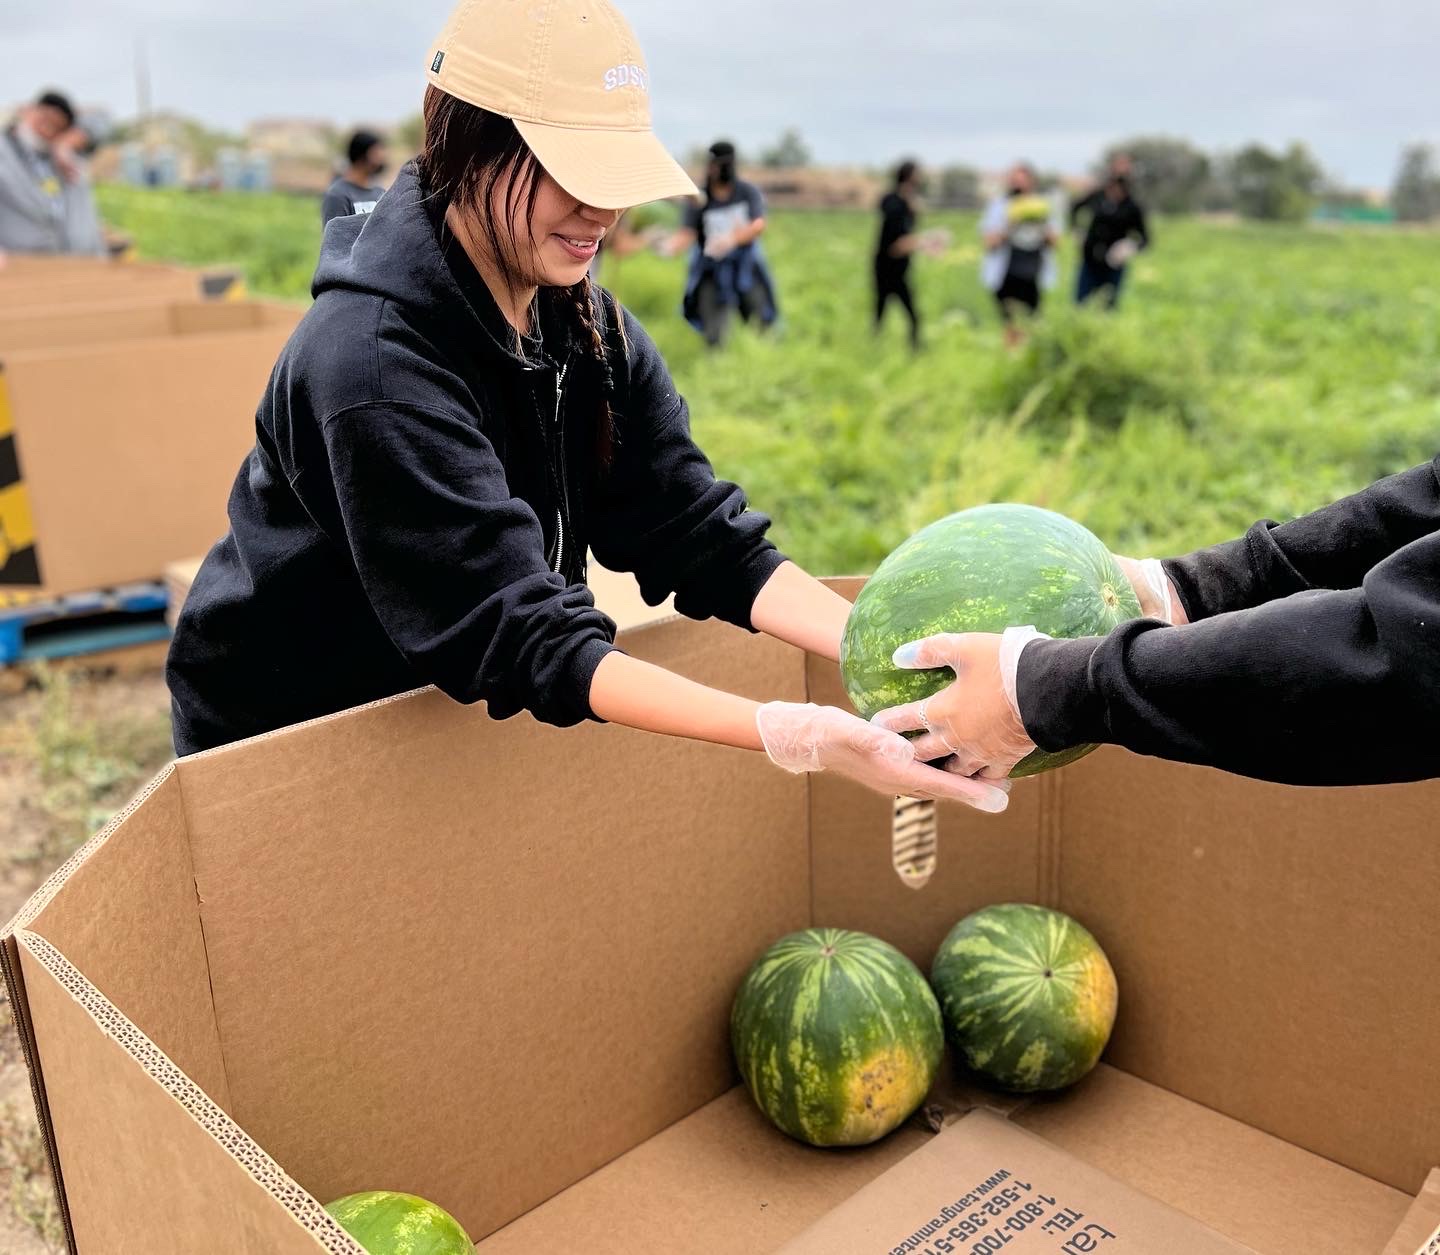 Upward Bound student volunteer harvesting watermelon